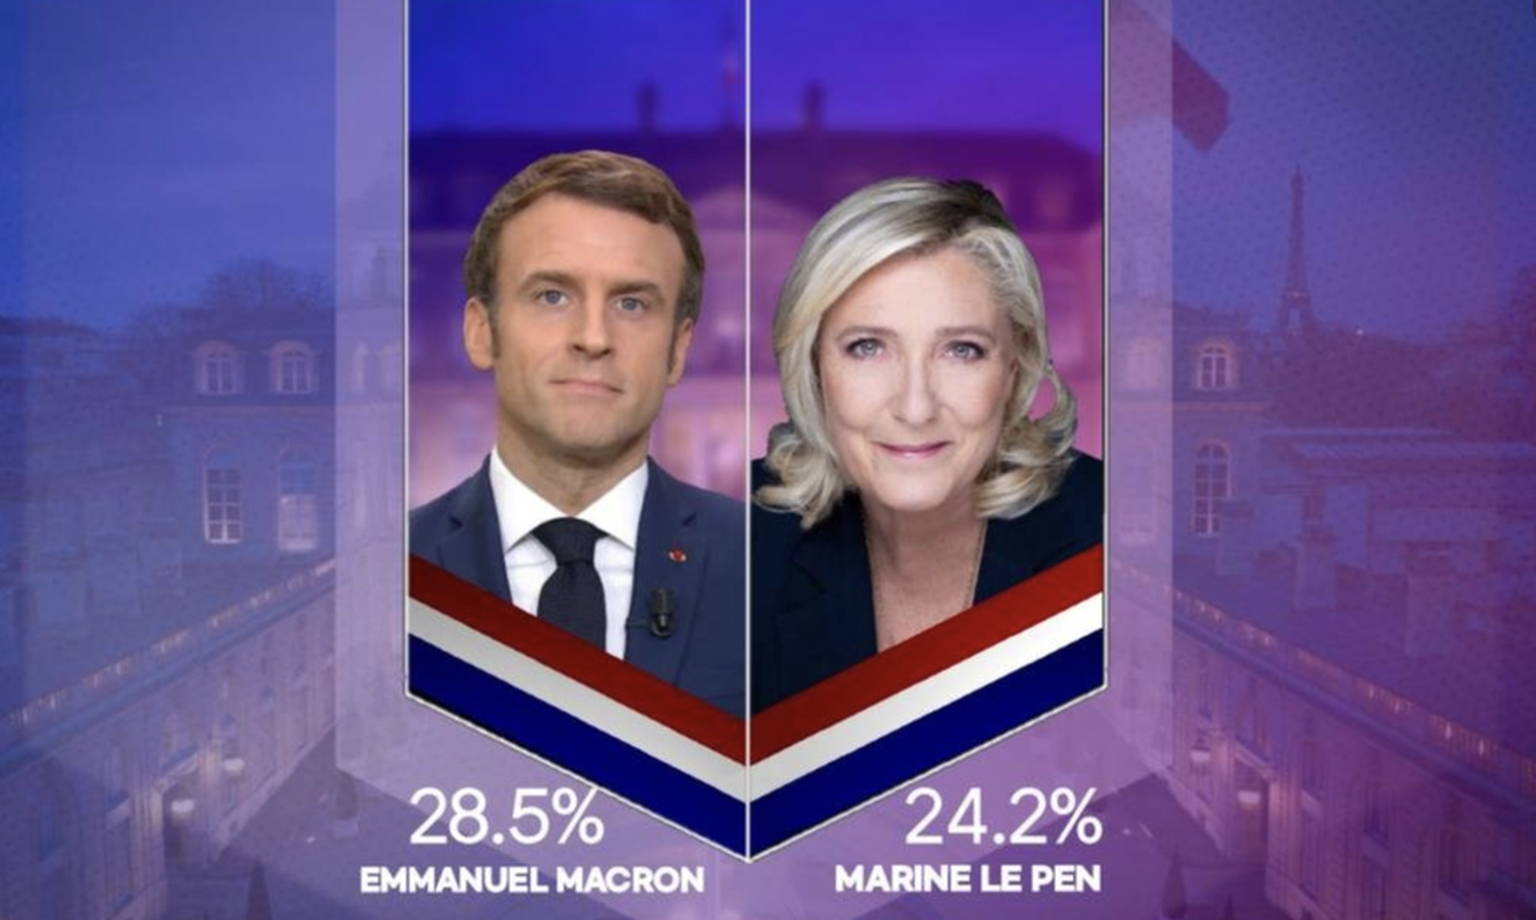 Emmanuel Macron oder Marine Le Pen, wer wird am 24. April gewinnen?